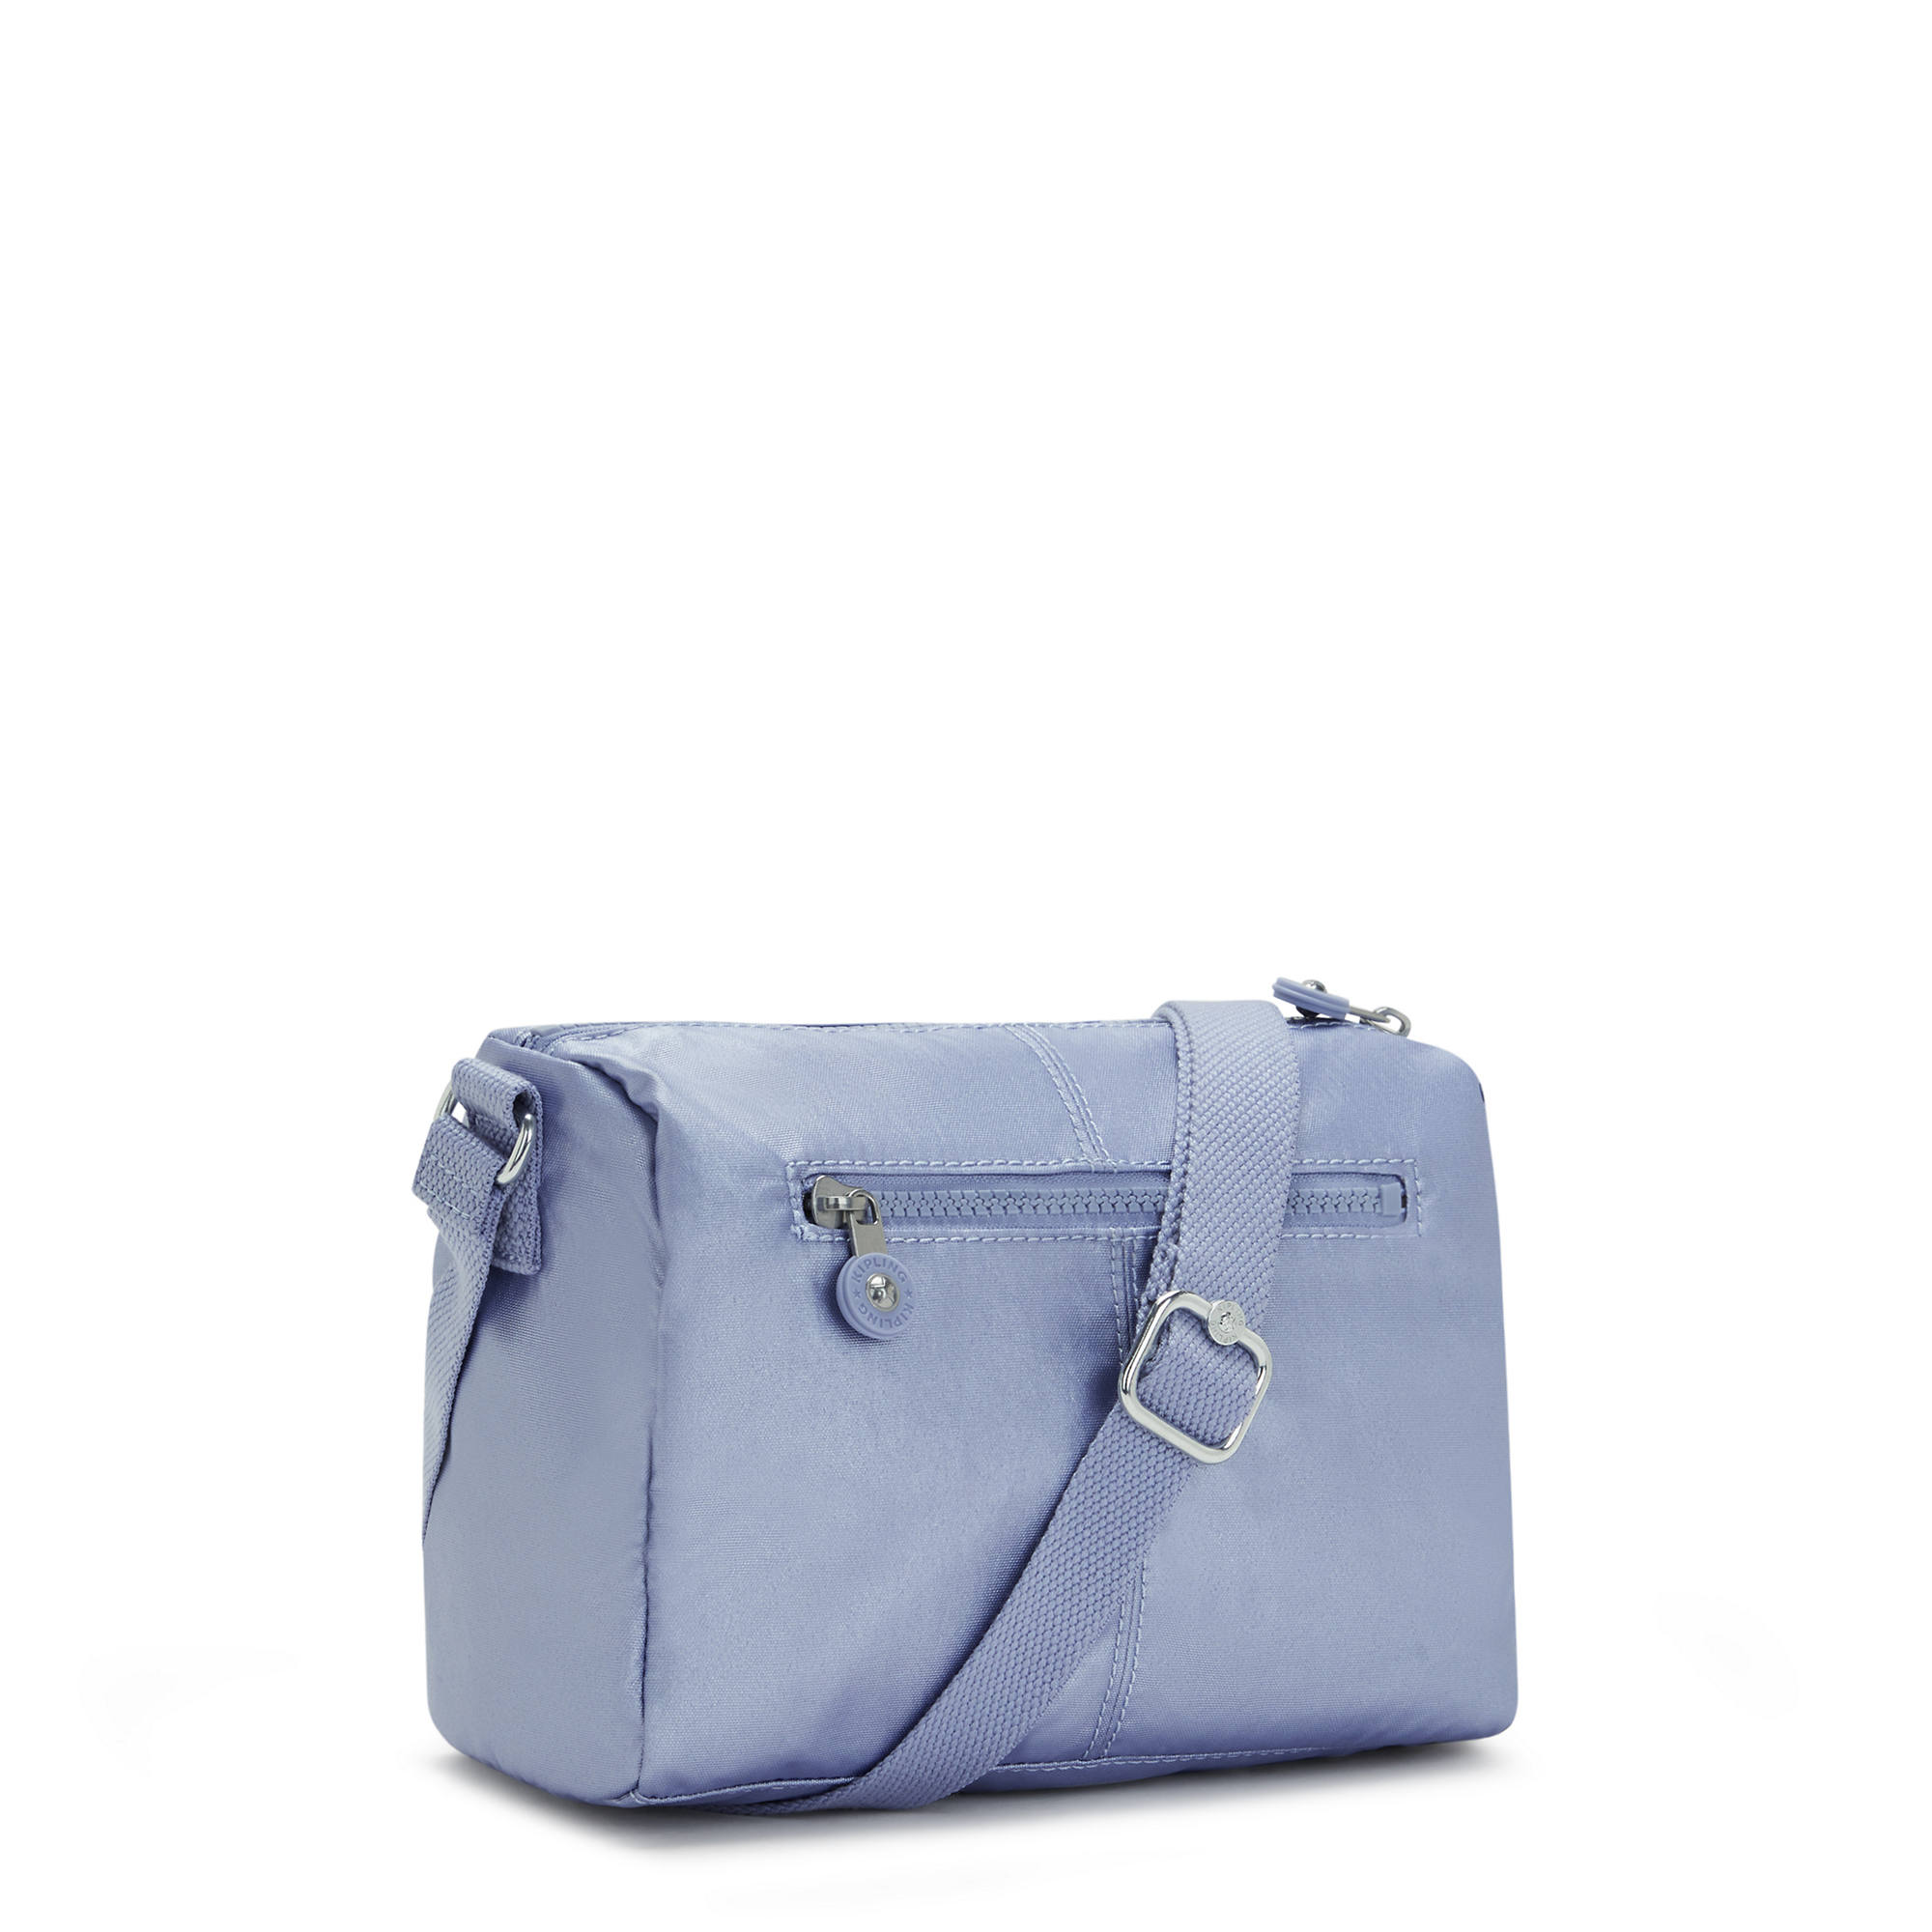 Kipling Women's Wes Metallic Crossbody Handbag with Adjustable Strap | eBay